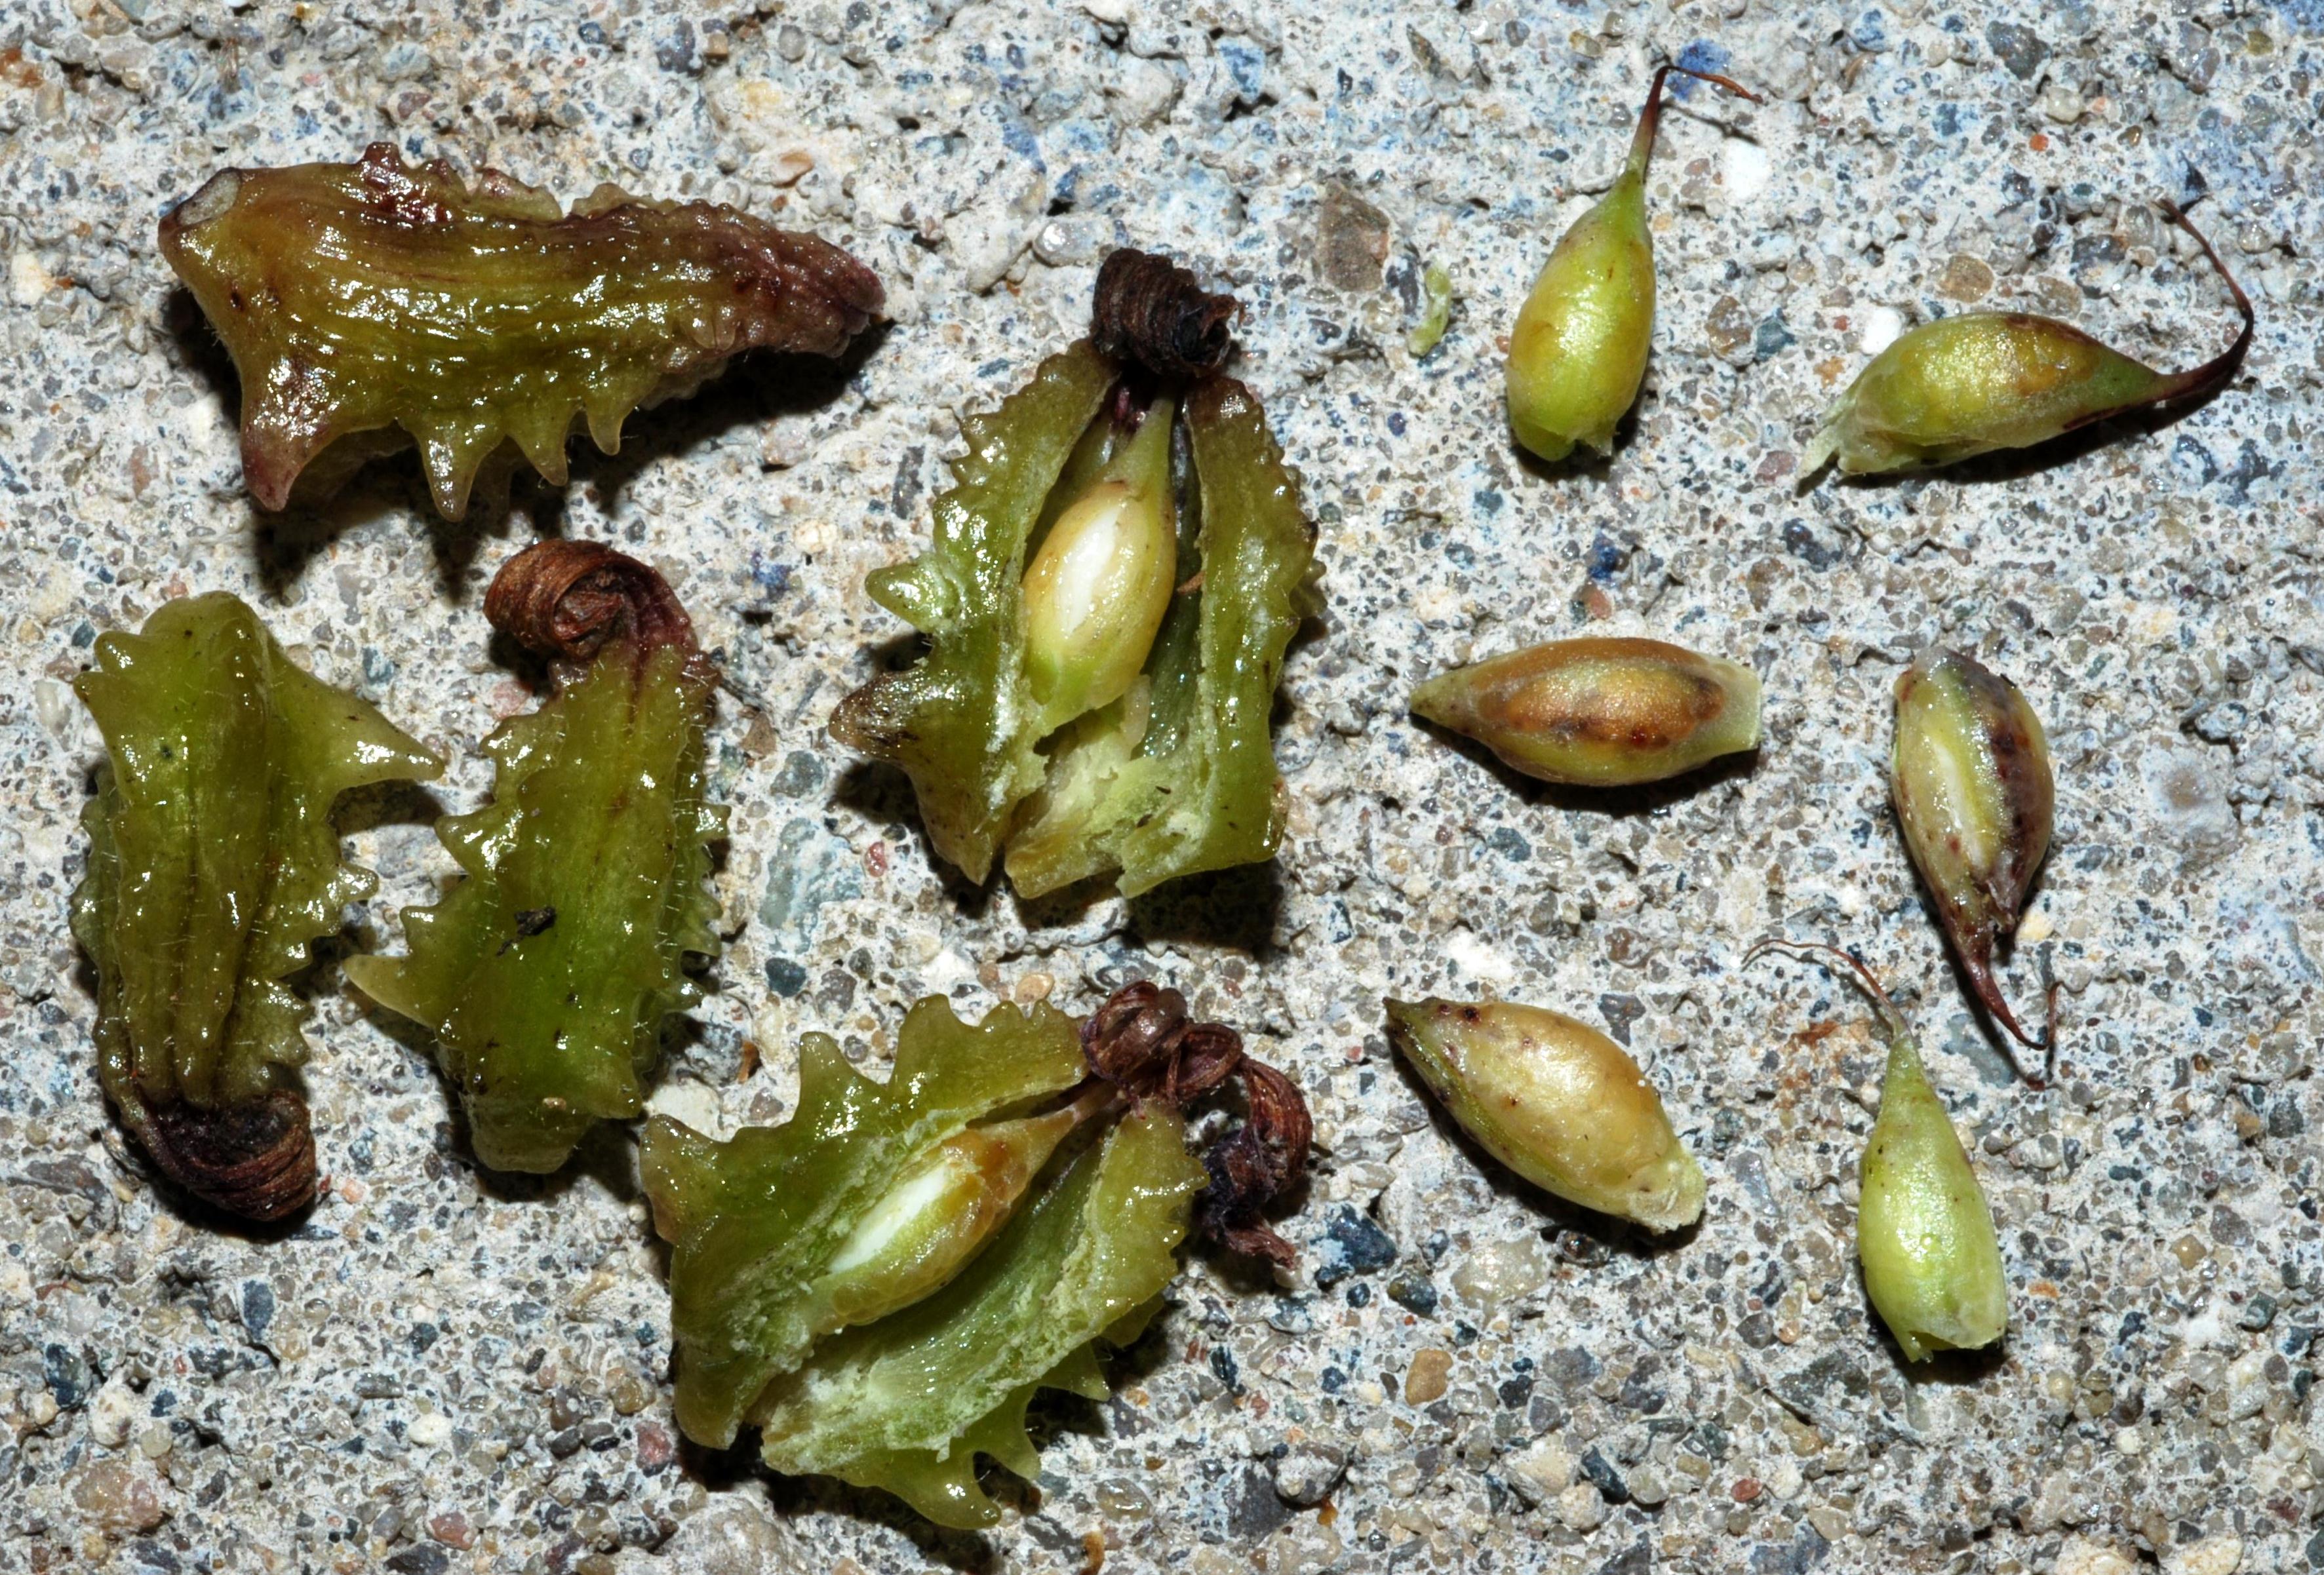 P. cordata - fruits/seeds